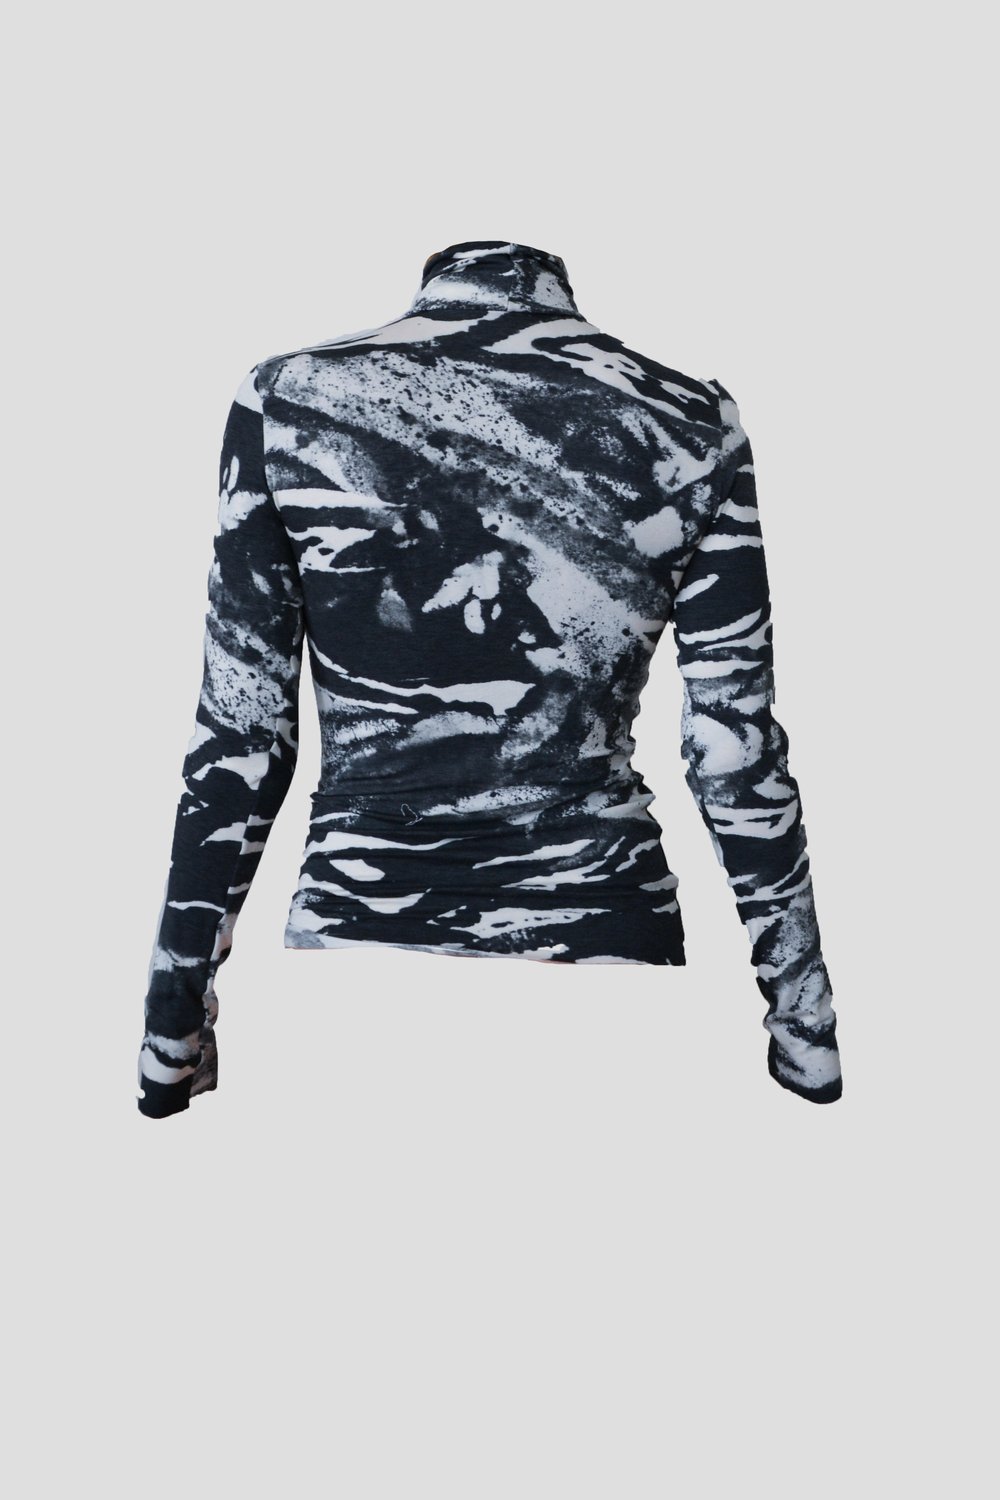 Image of Zebra shirt 